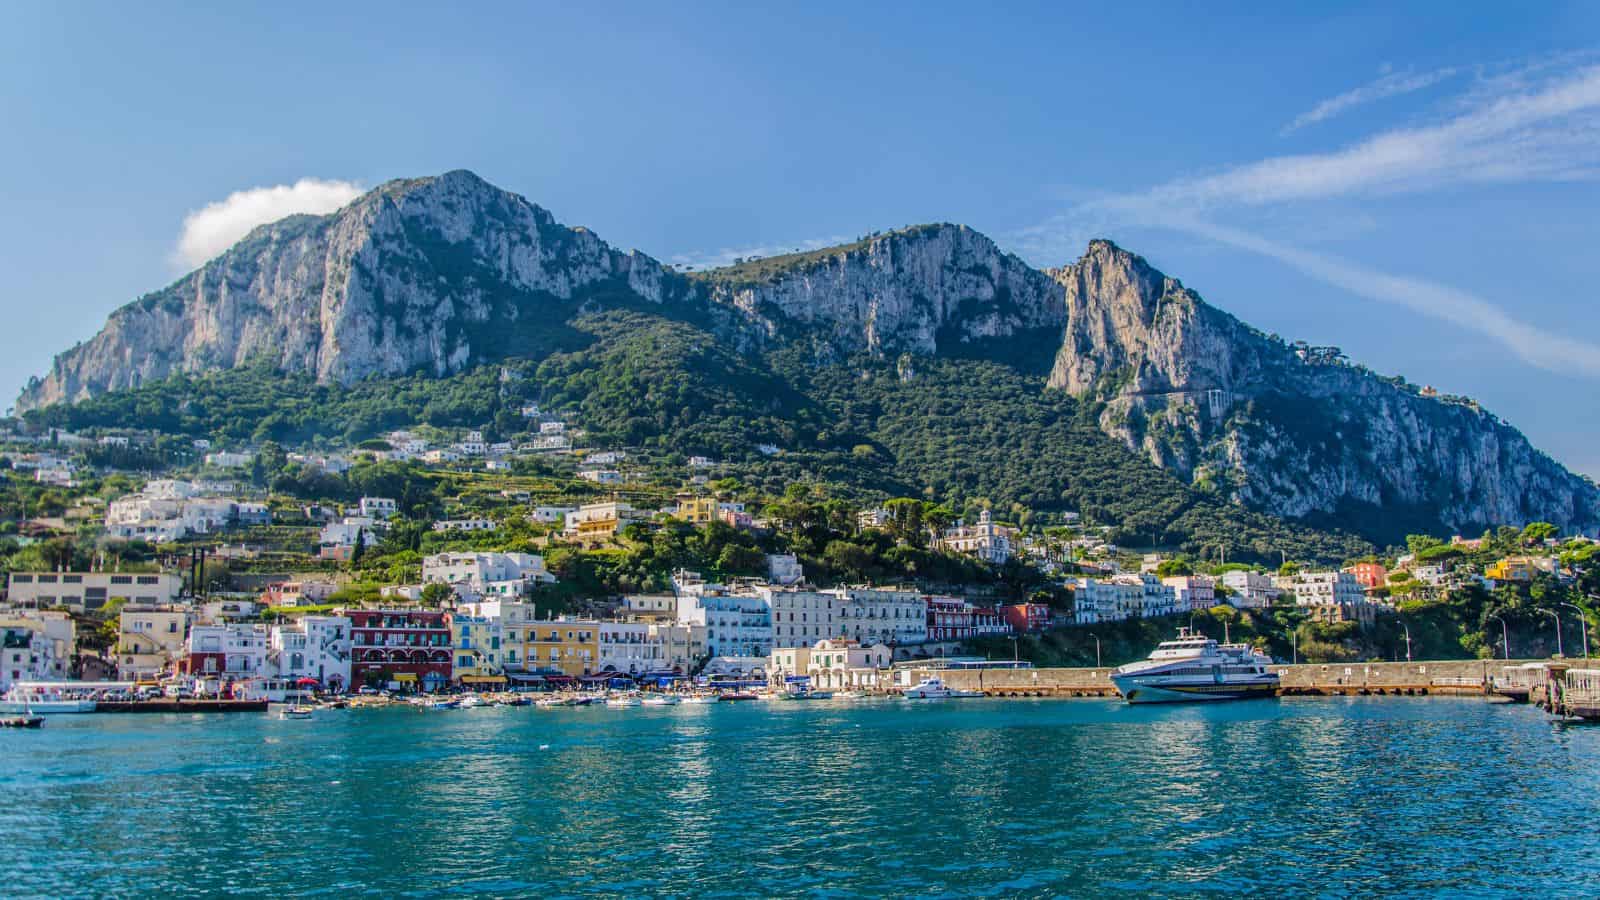 The Amalfi Coast Italy